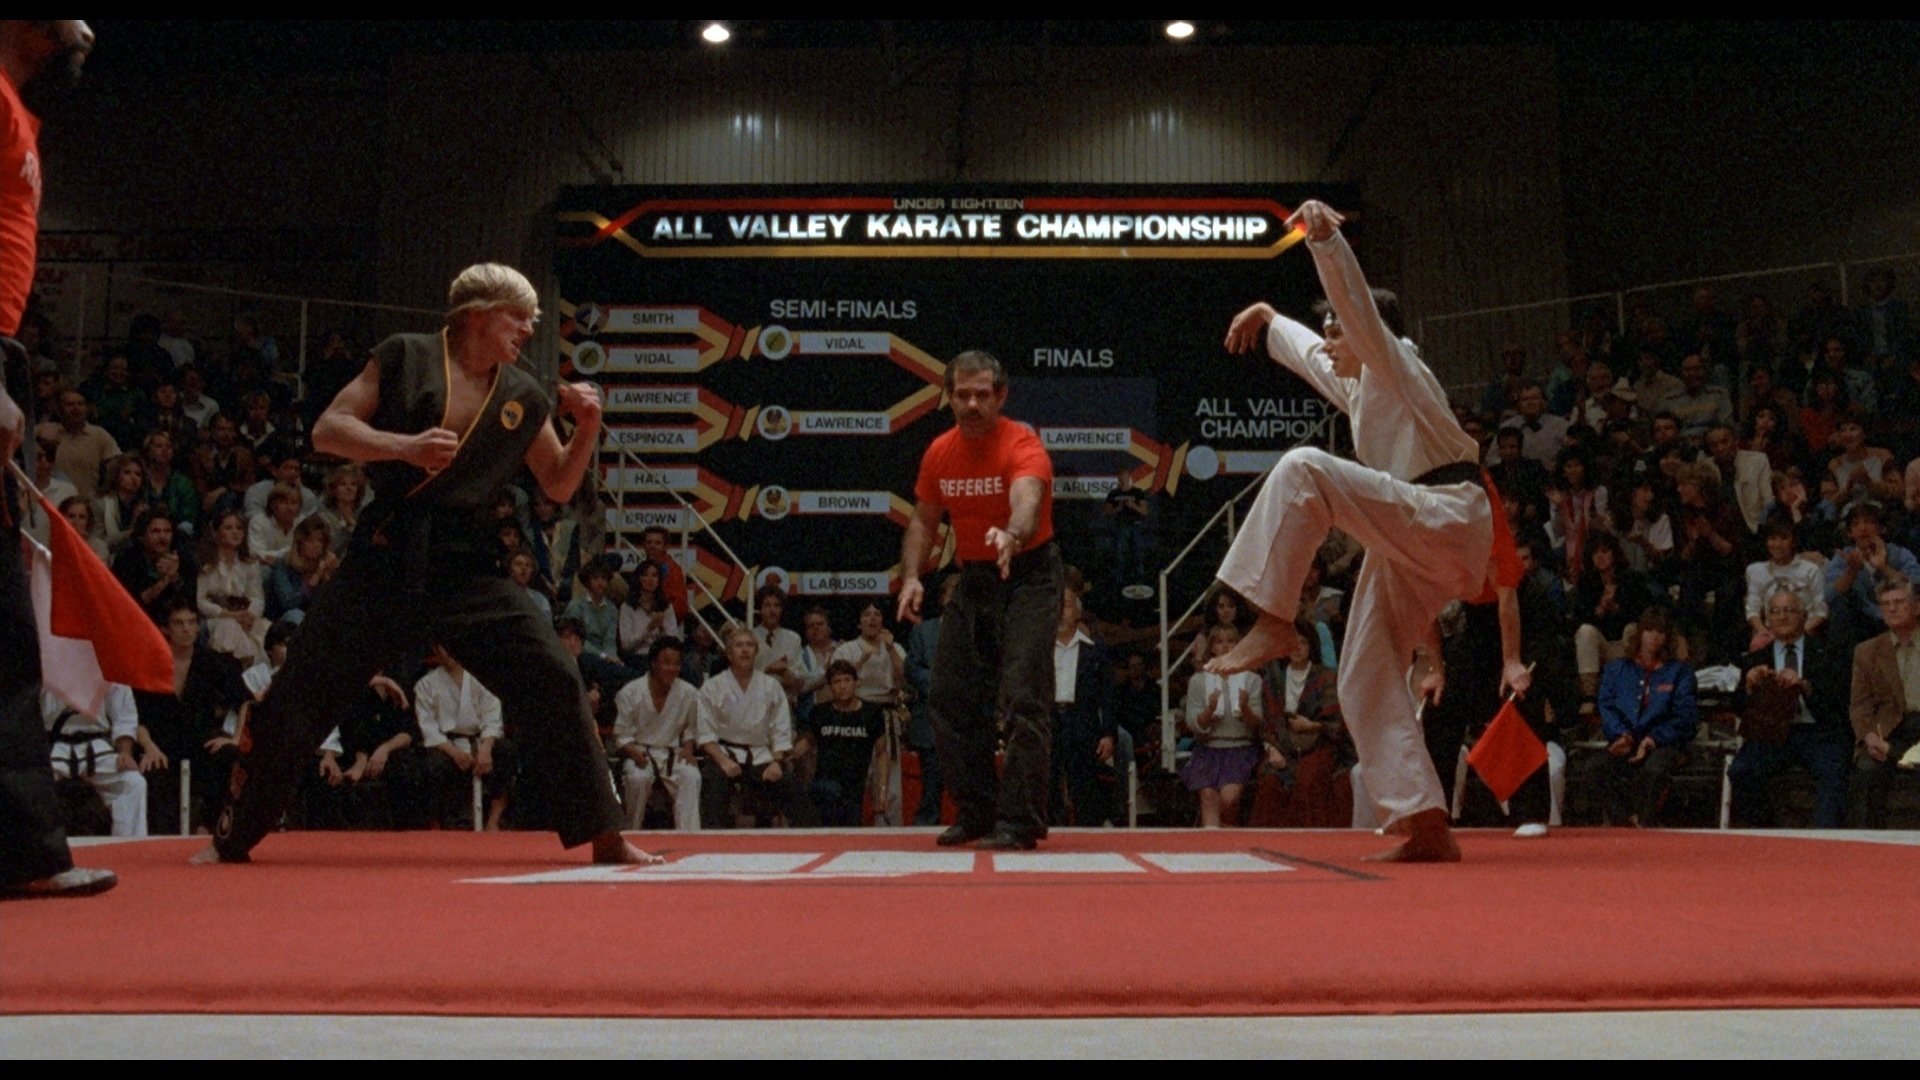 karate kid 1984 wallpaper